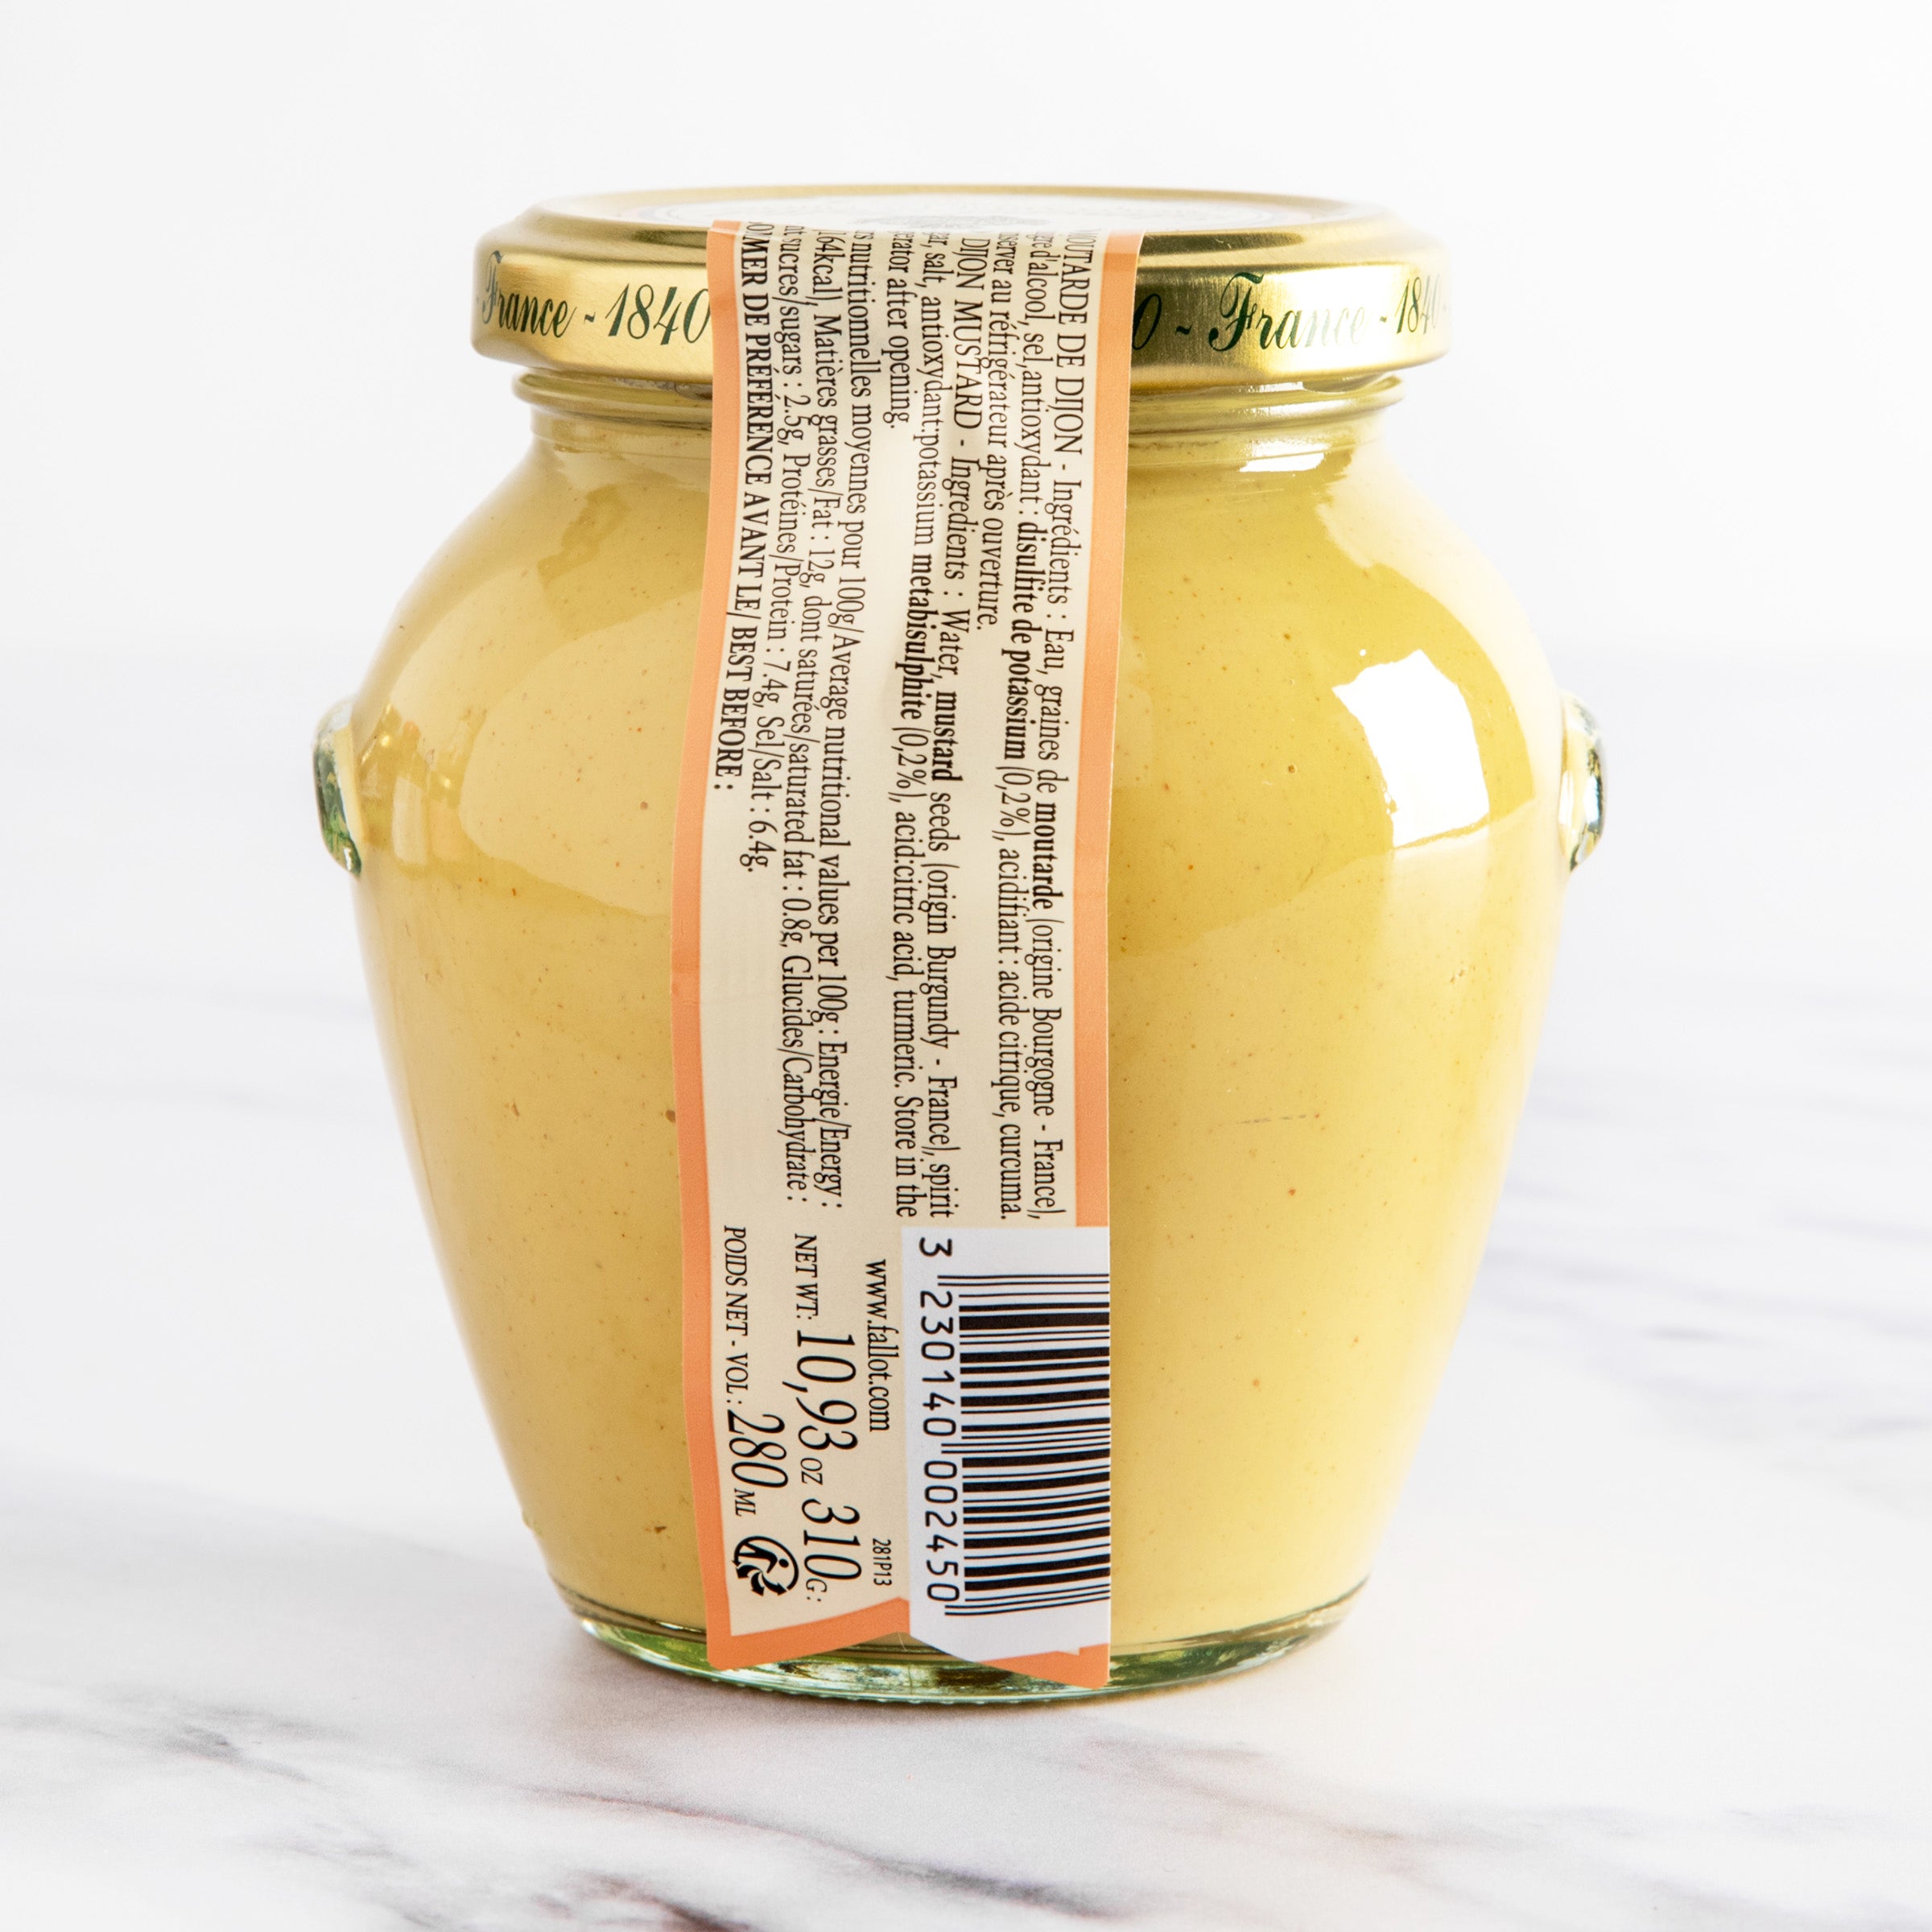 igourmet_1070-2_Dijon Mustard in Orsio Glass Jar_Edmond Fallot_Condiments & Spreads